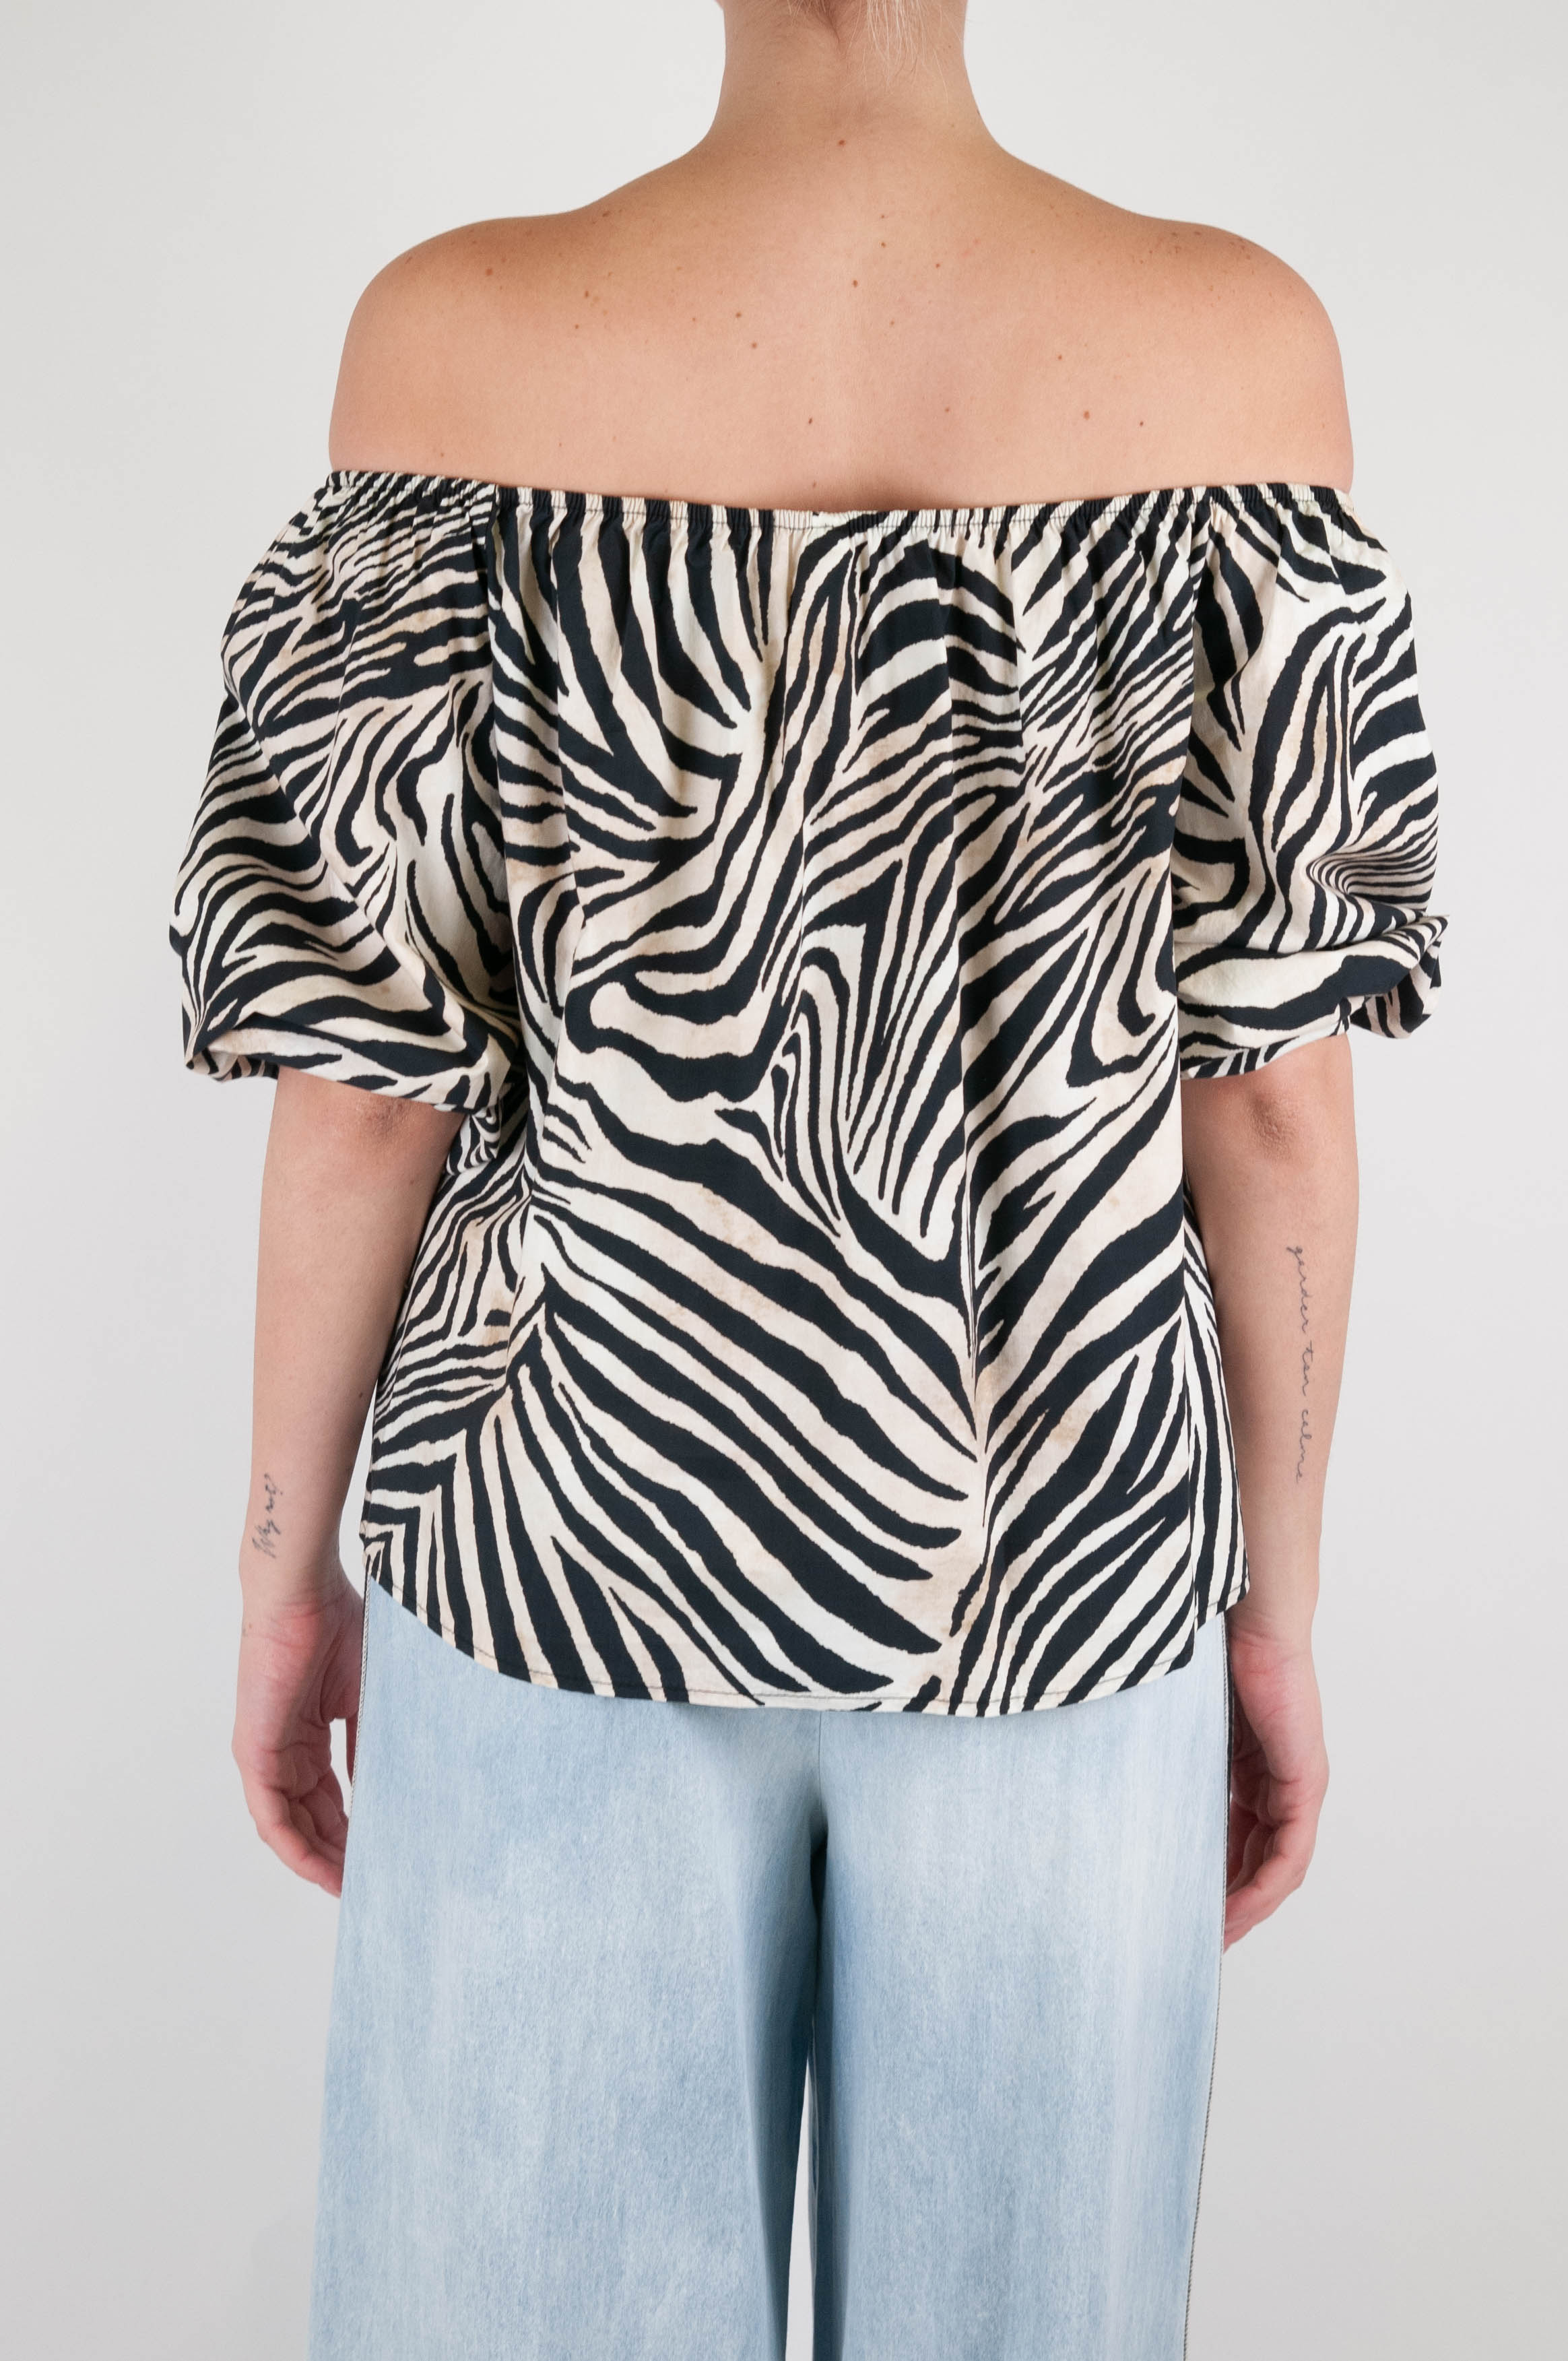 Tension in - Zebra animal print top with shiffer neckline